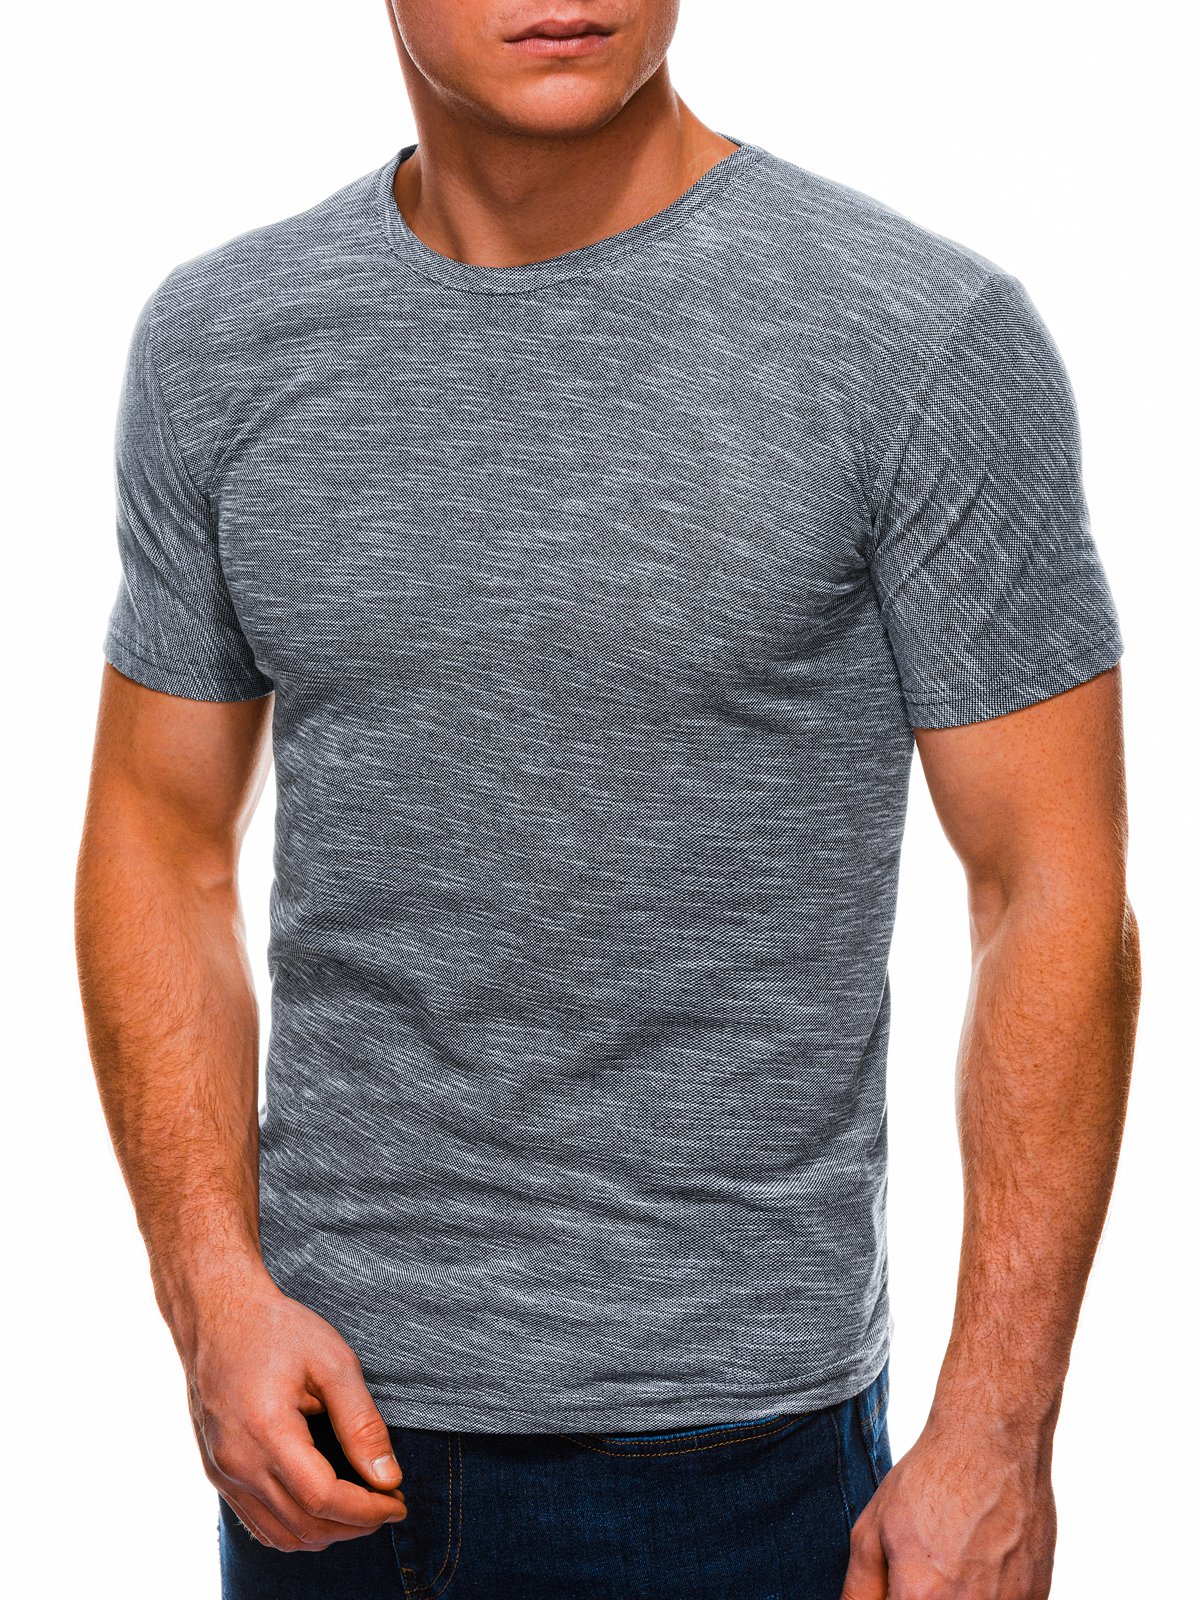 Men's plain t-shirt S1323 - dark grey | MODONE wholesale - Clothing For Men